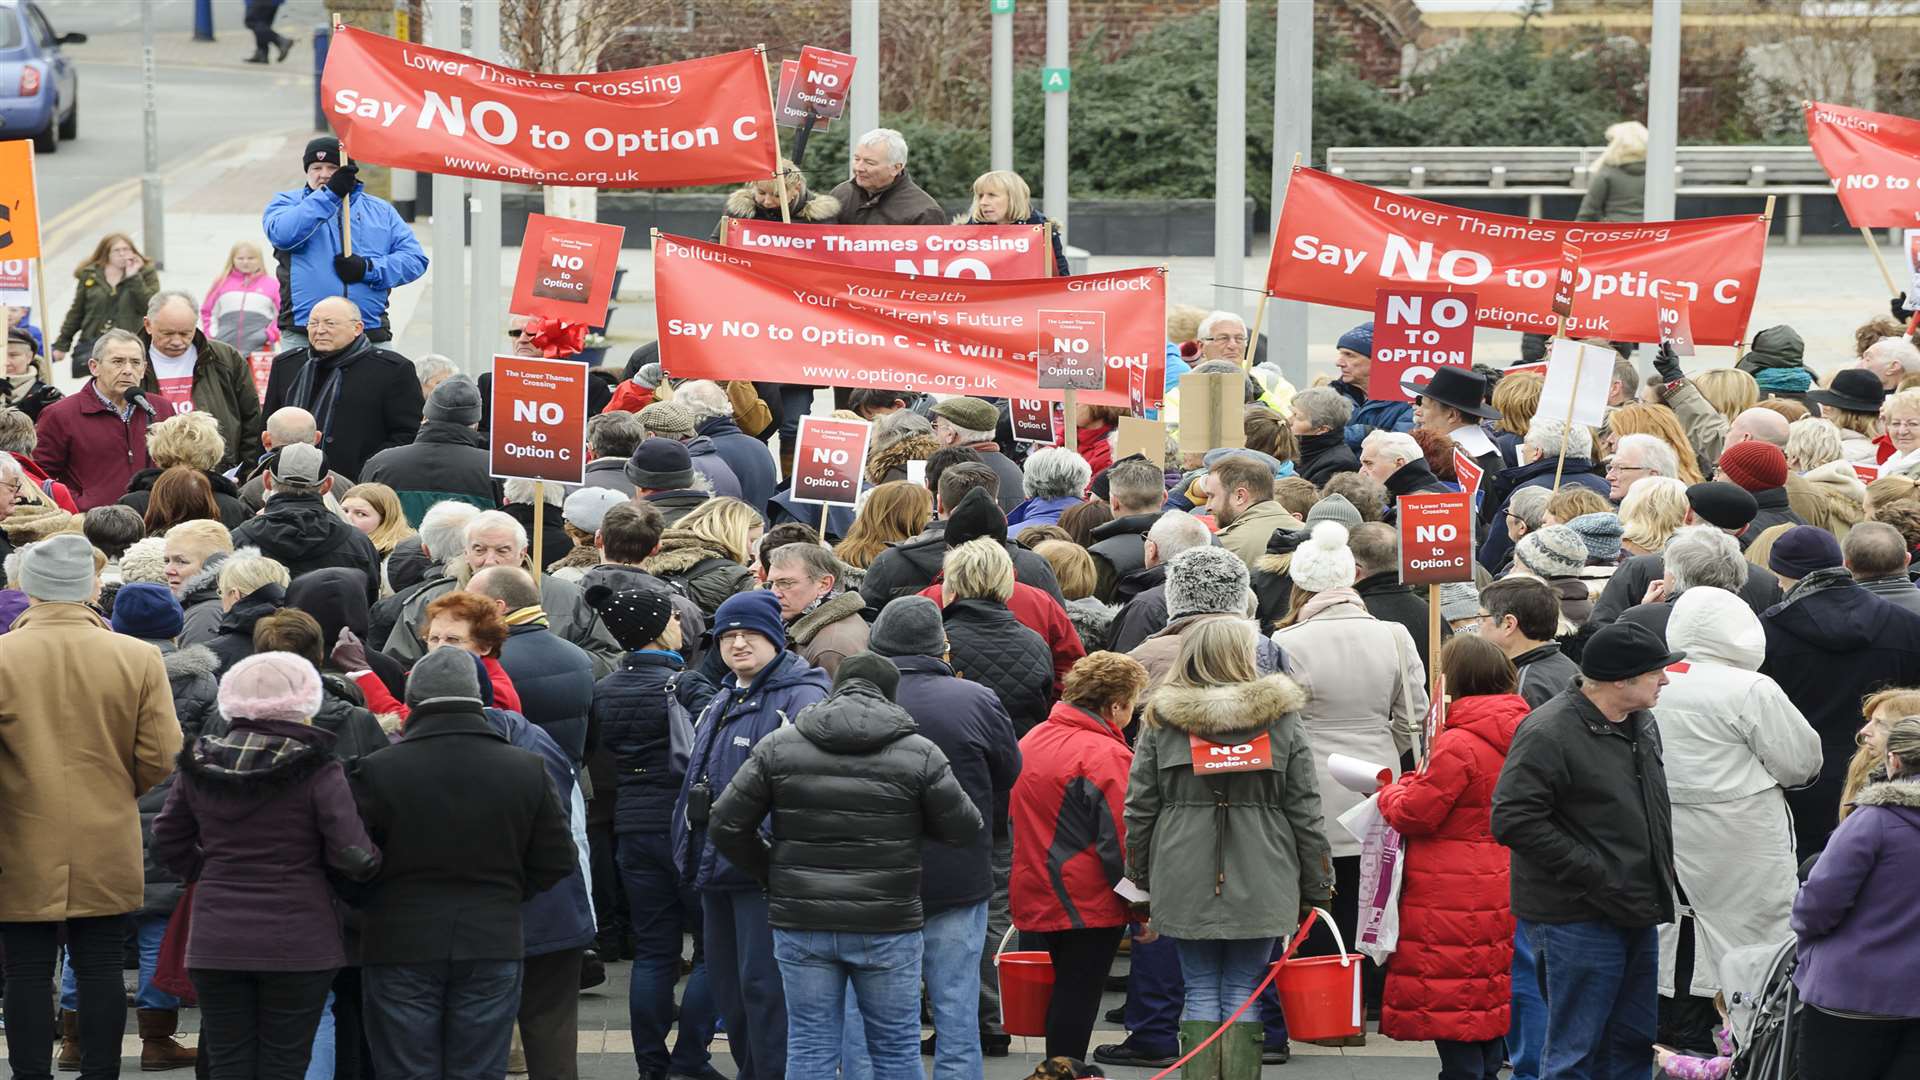 A protest in Community Square, Gravesend